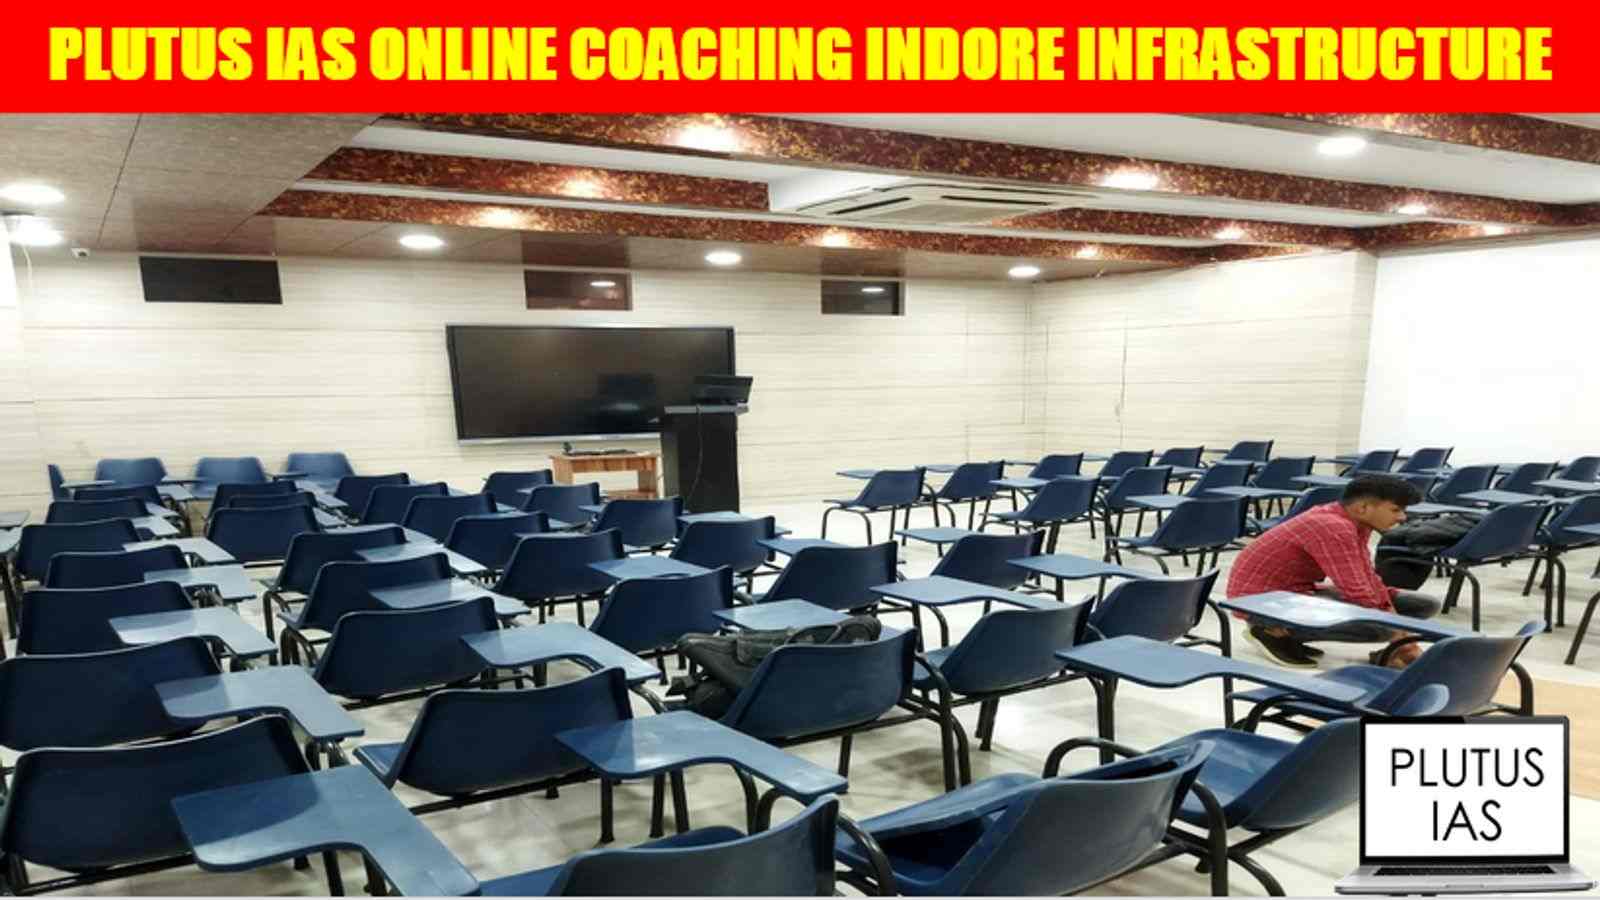 Plutus IAS Online Coaching Indore Infrastructure